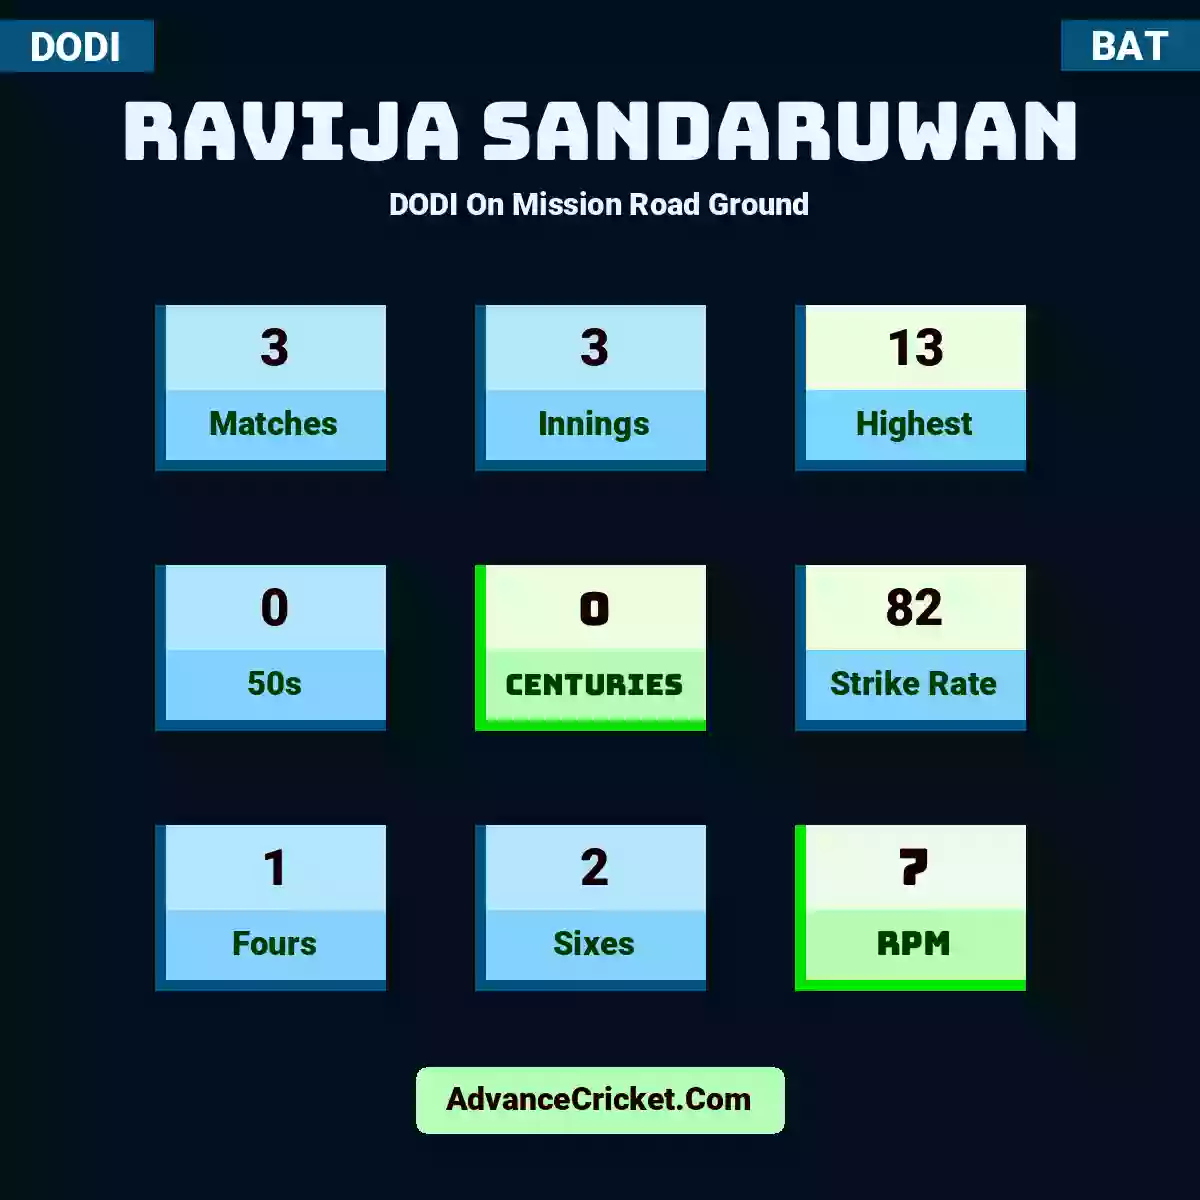 Ravija Sandaruwan DODI  On Mission Road Ground, Ravija Sandaruwan played 3 matches, scored 13 runs as highest, 0 half-centuries, and 0 centuries, with a strike rate of 82. R.Sandaruwan hit 1 fours and 2 sixes, with an RPM of 7.